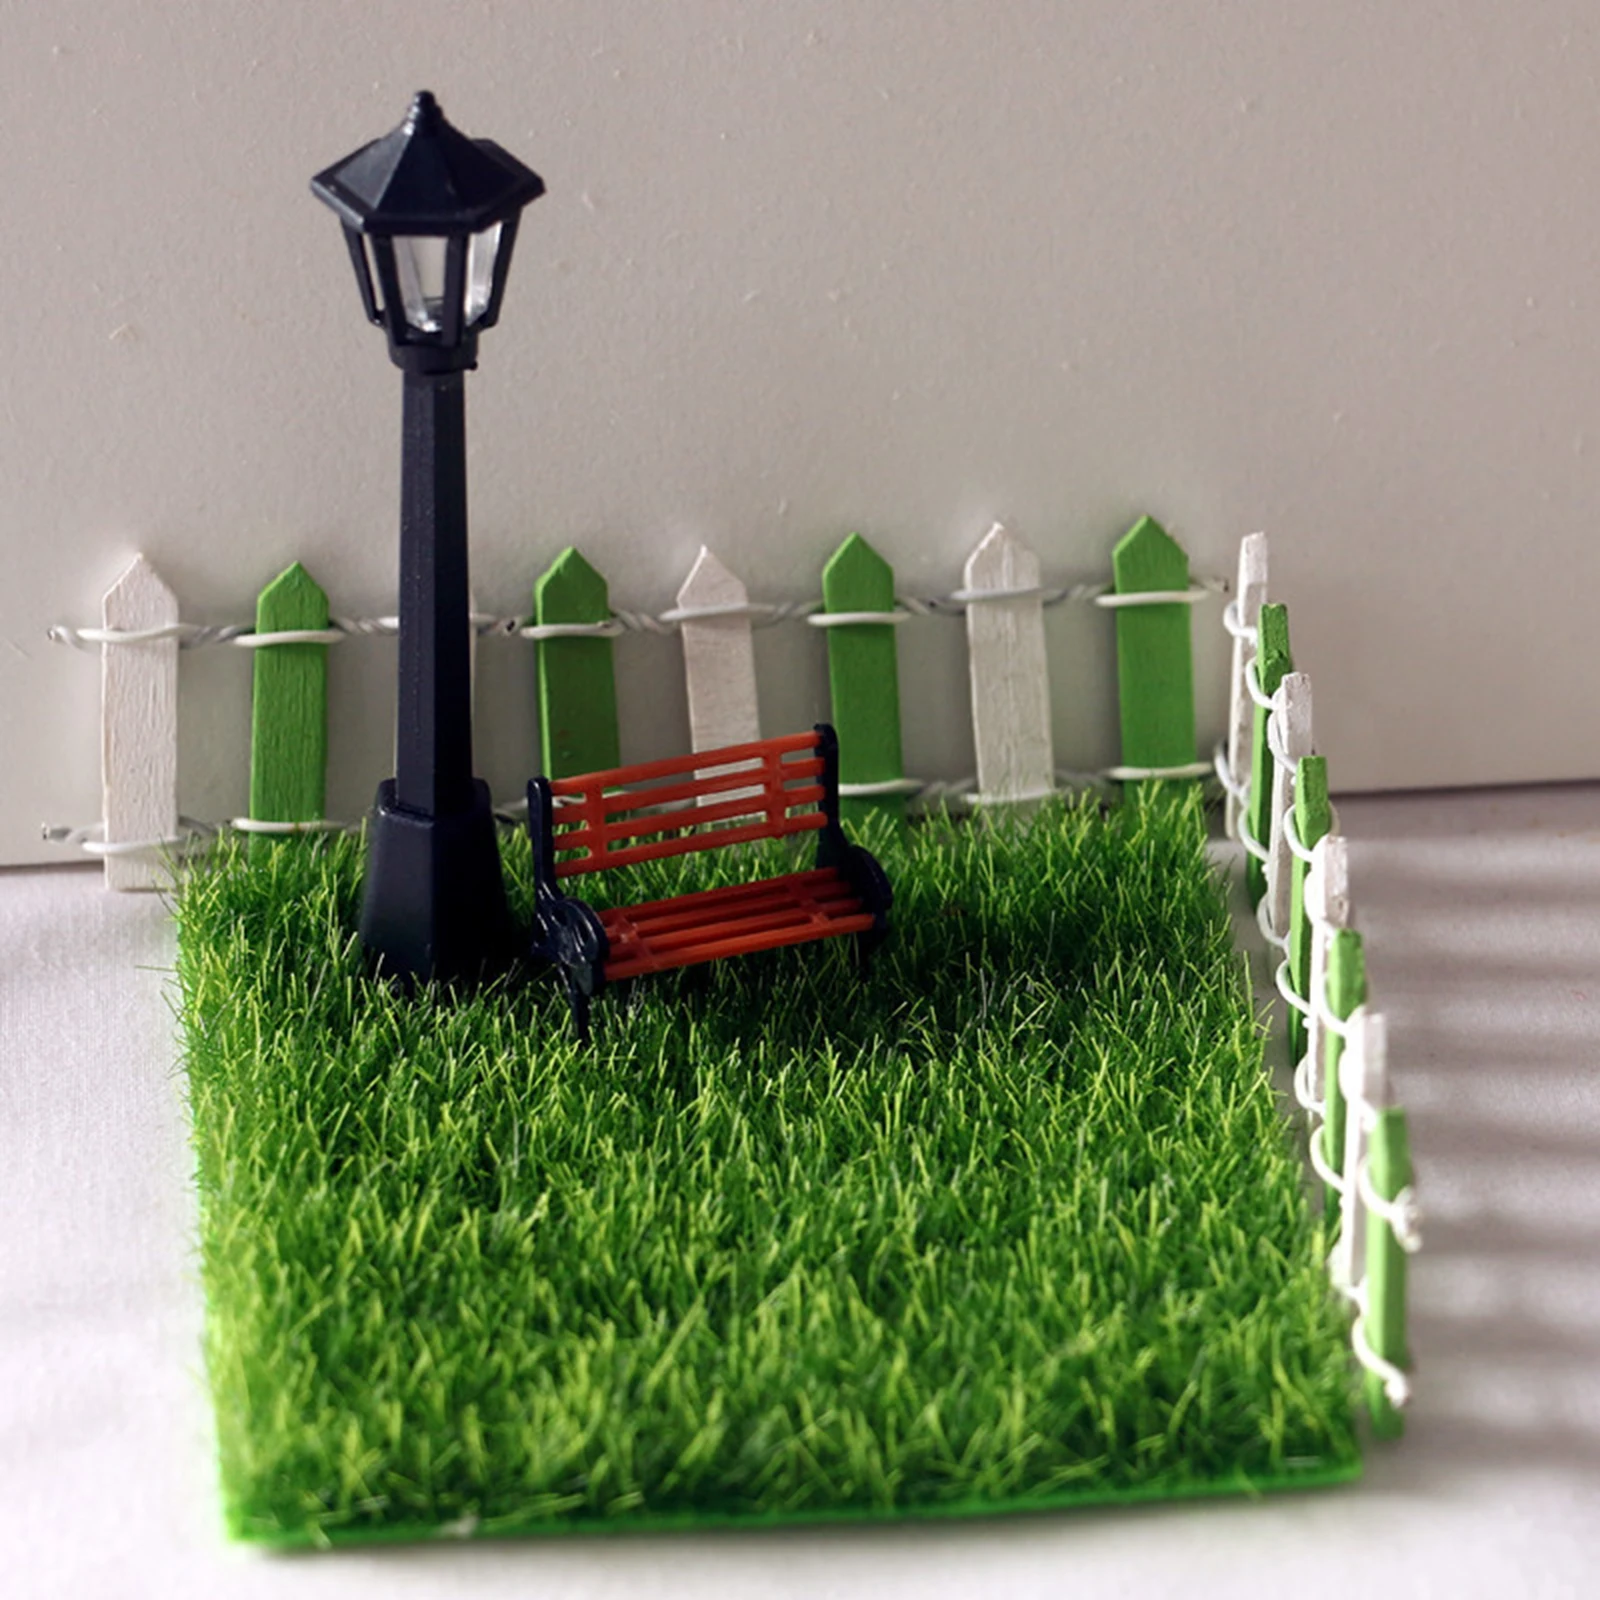 1/12 Doll House Miniature Fairy Garden Green Lawn Street Light Micro Landscape Patio Decoration Creative Furniture Set